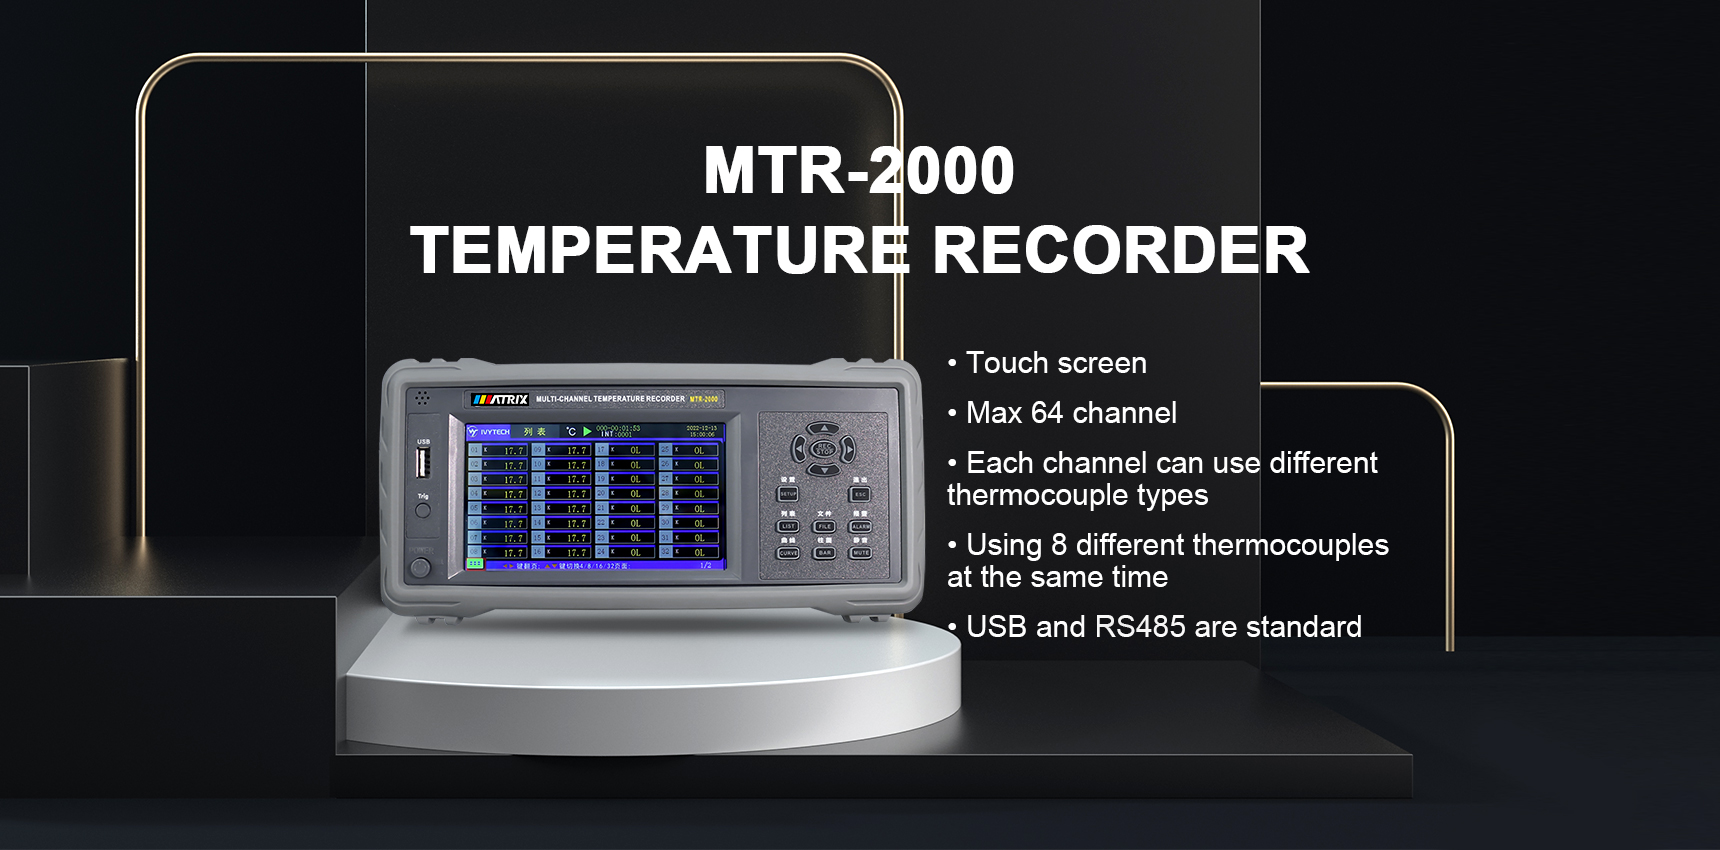 MTR-2000 SERIES TEMPERATURE RECORDER